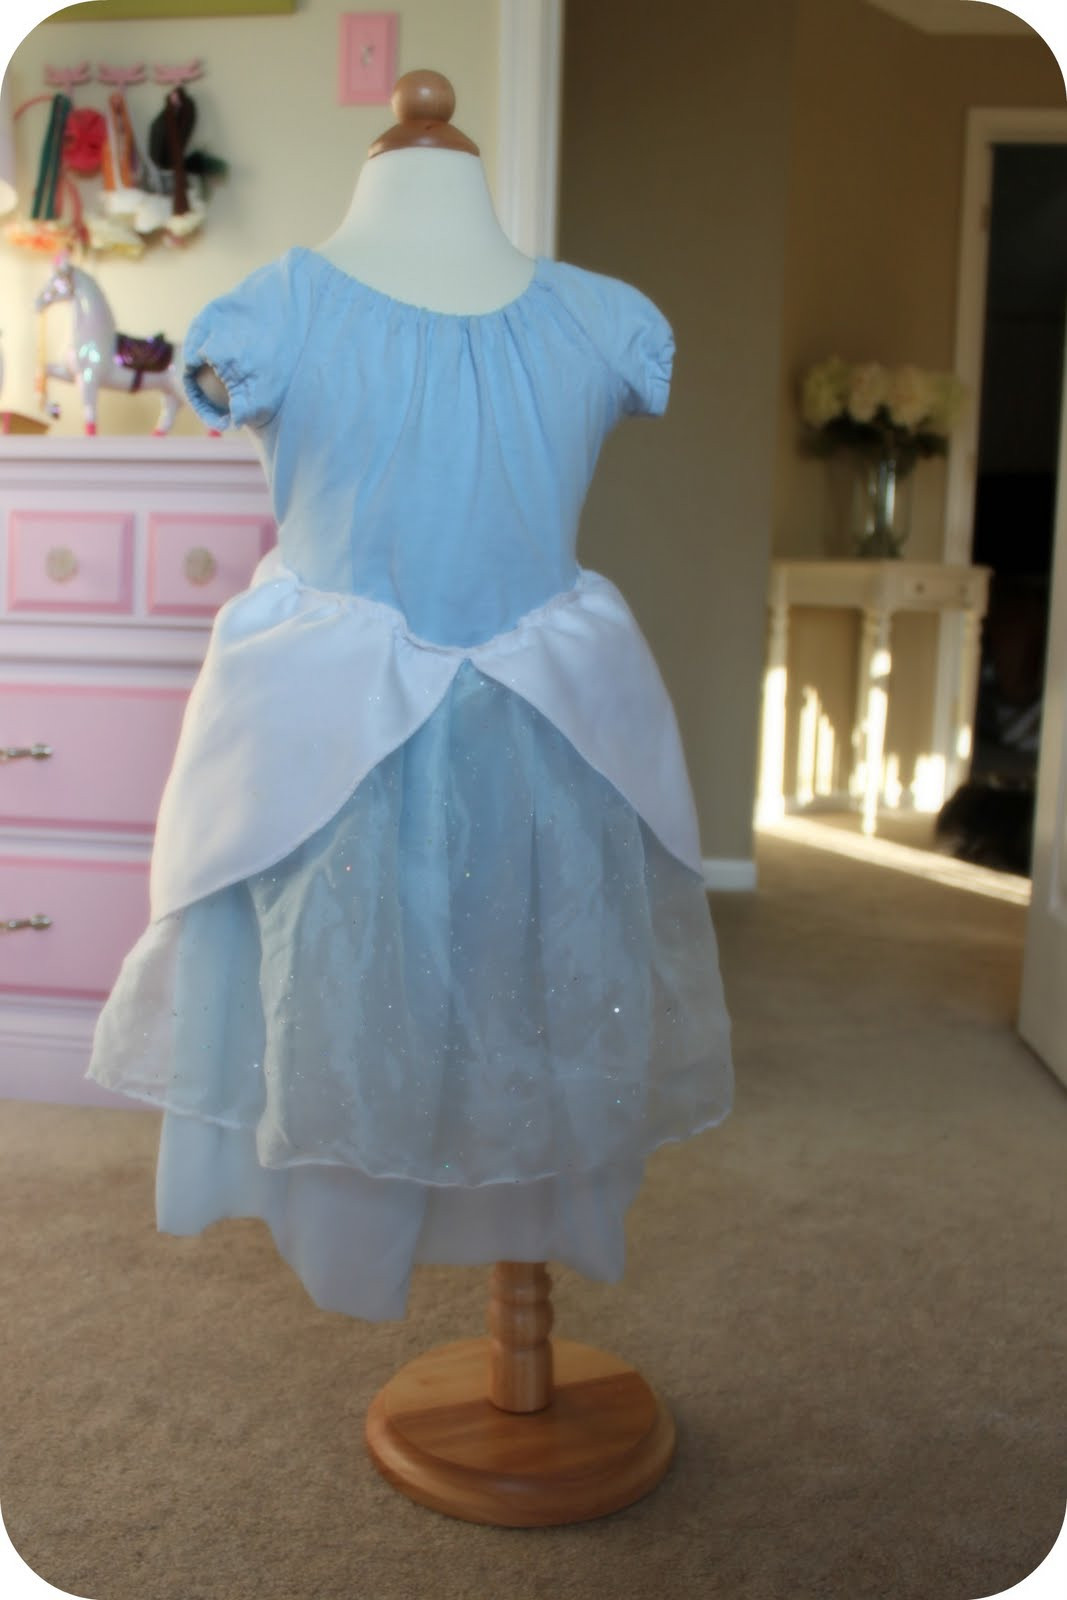 Best ideas about DIY Cinderella Costume
. Save or Pin DIY Cinderella Dress Now.